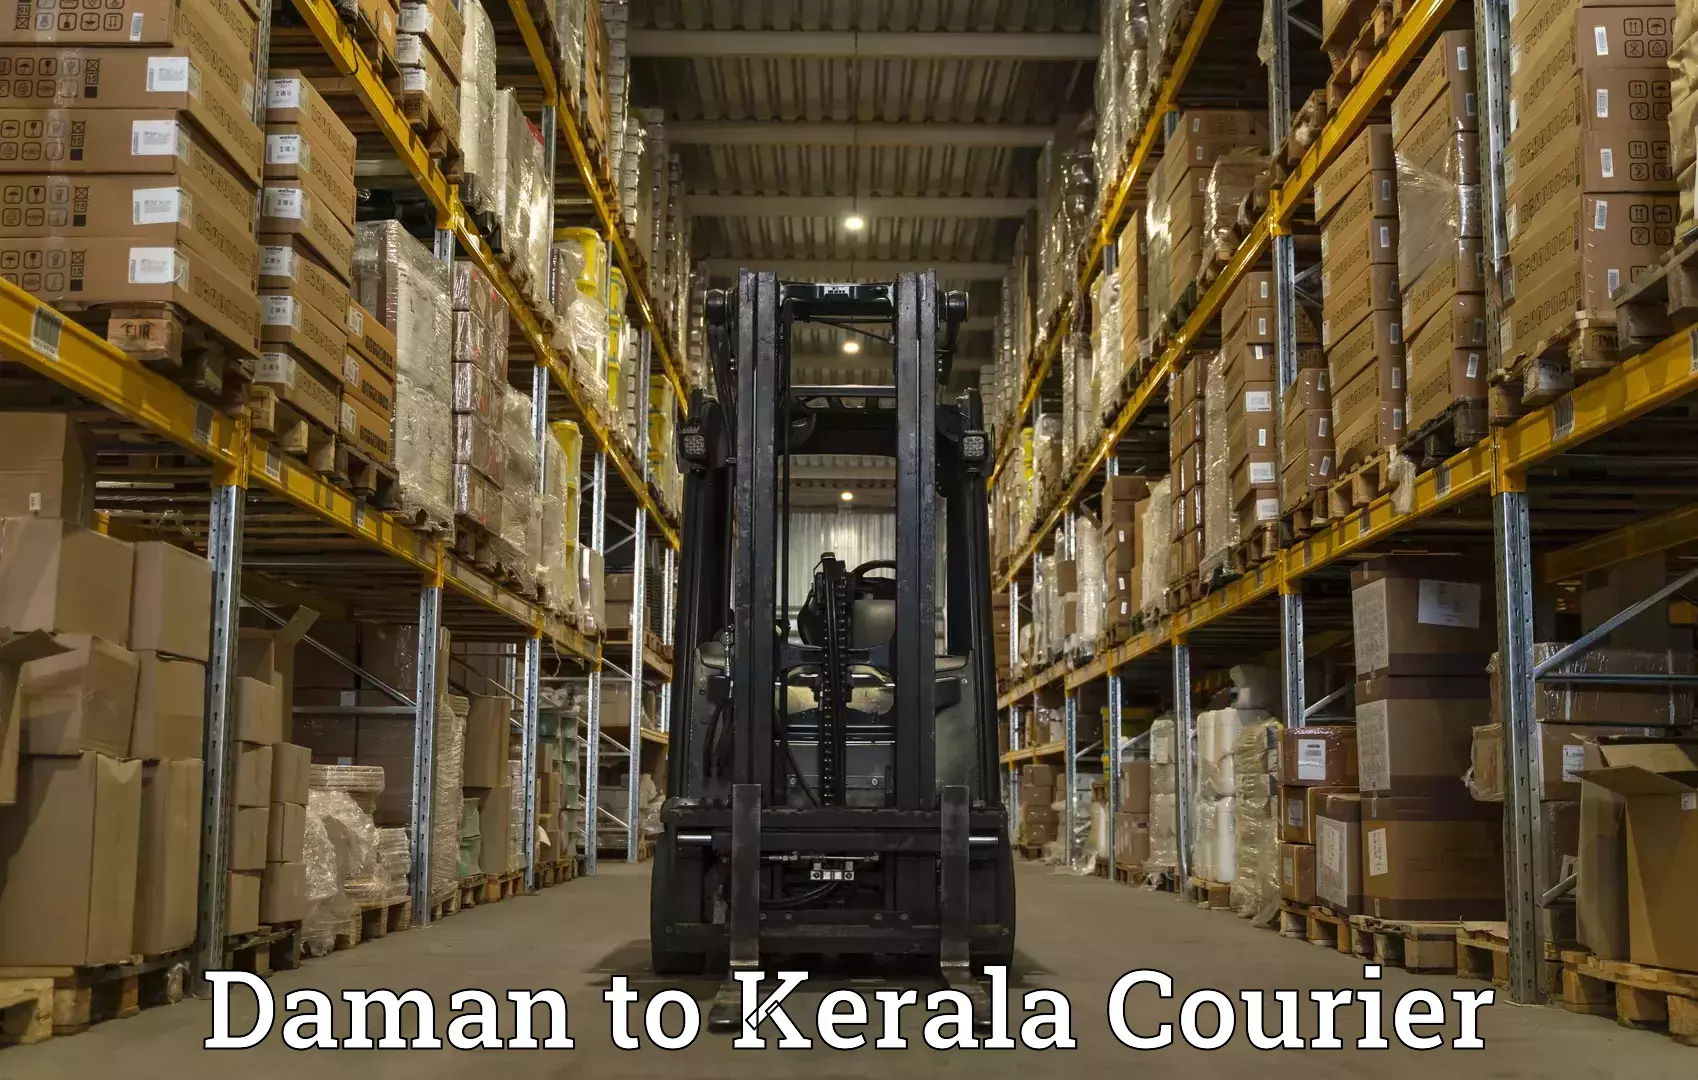 International parcel service Daman to Munnar